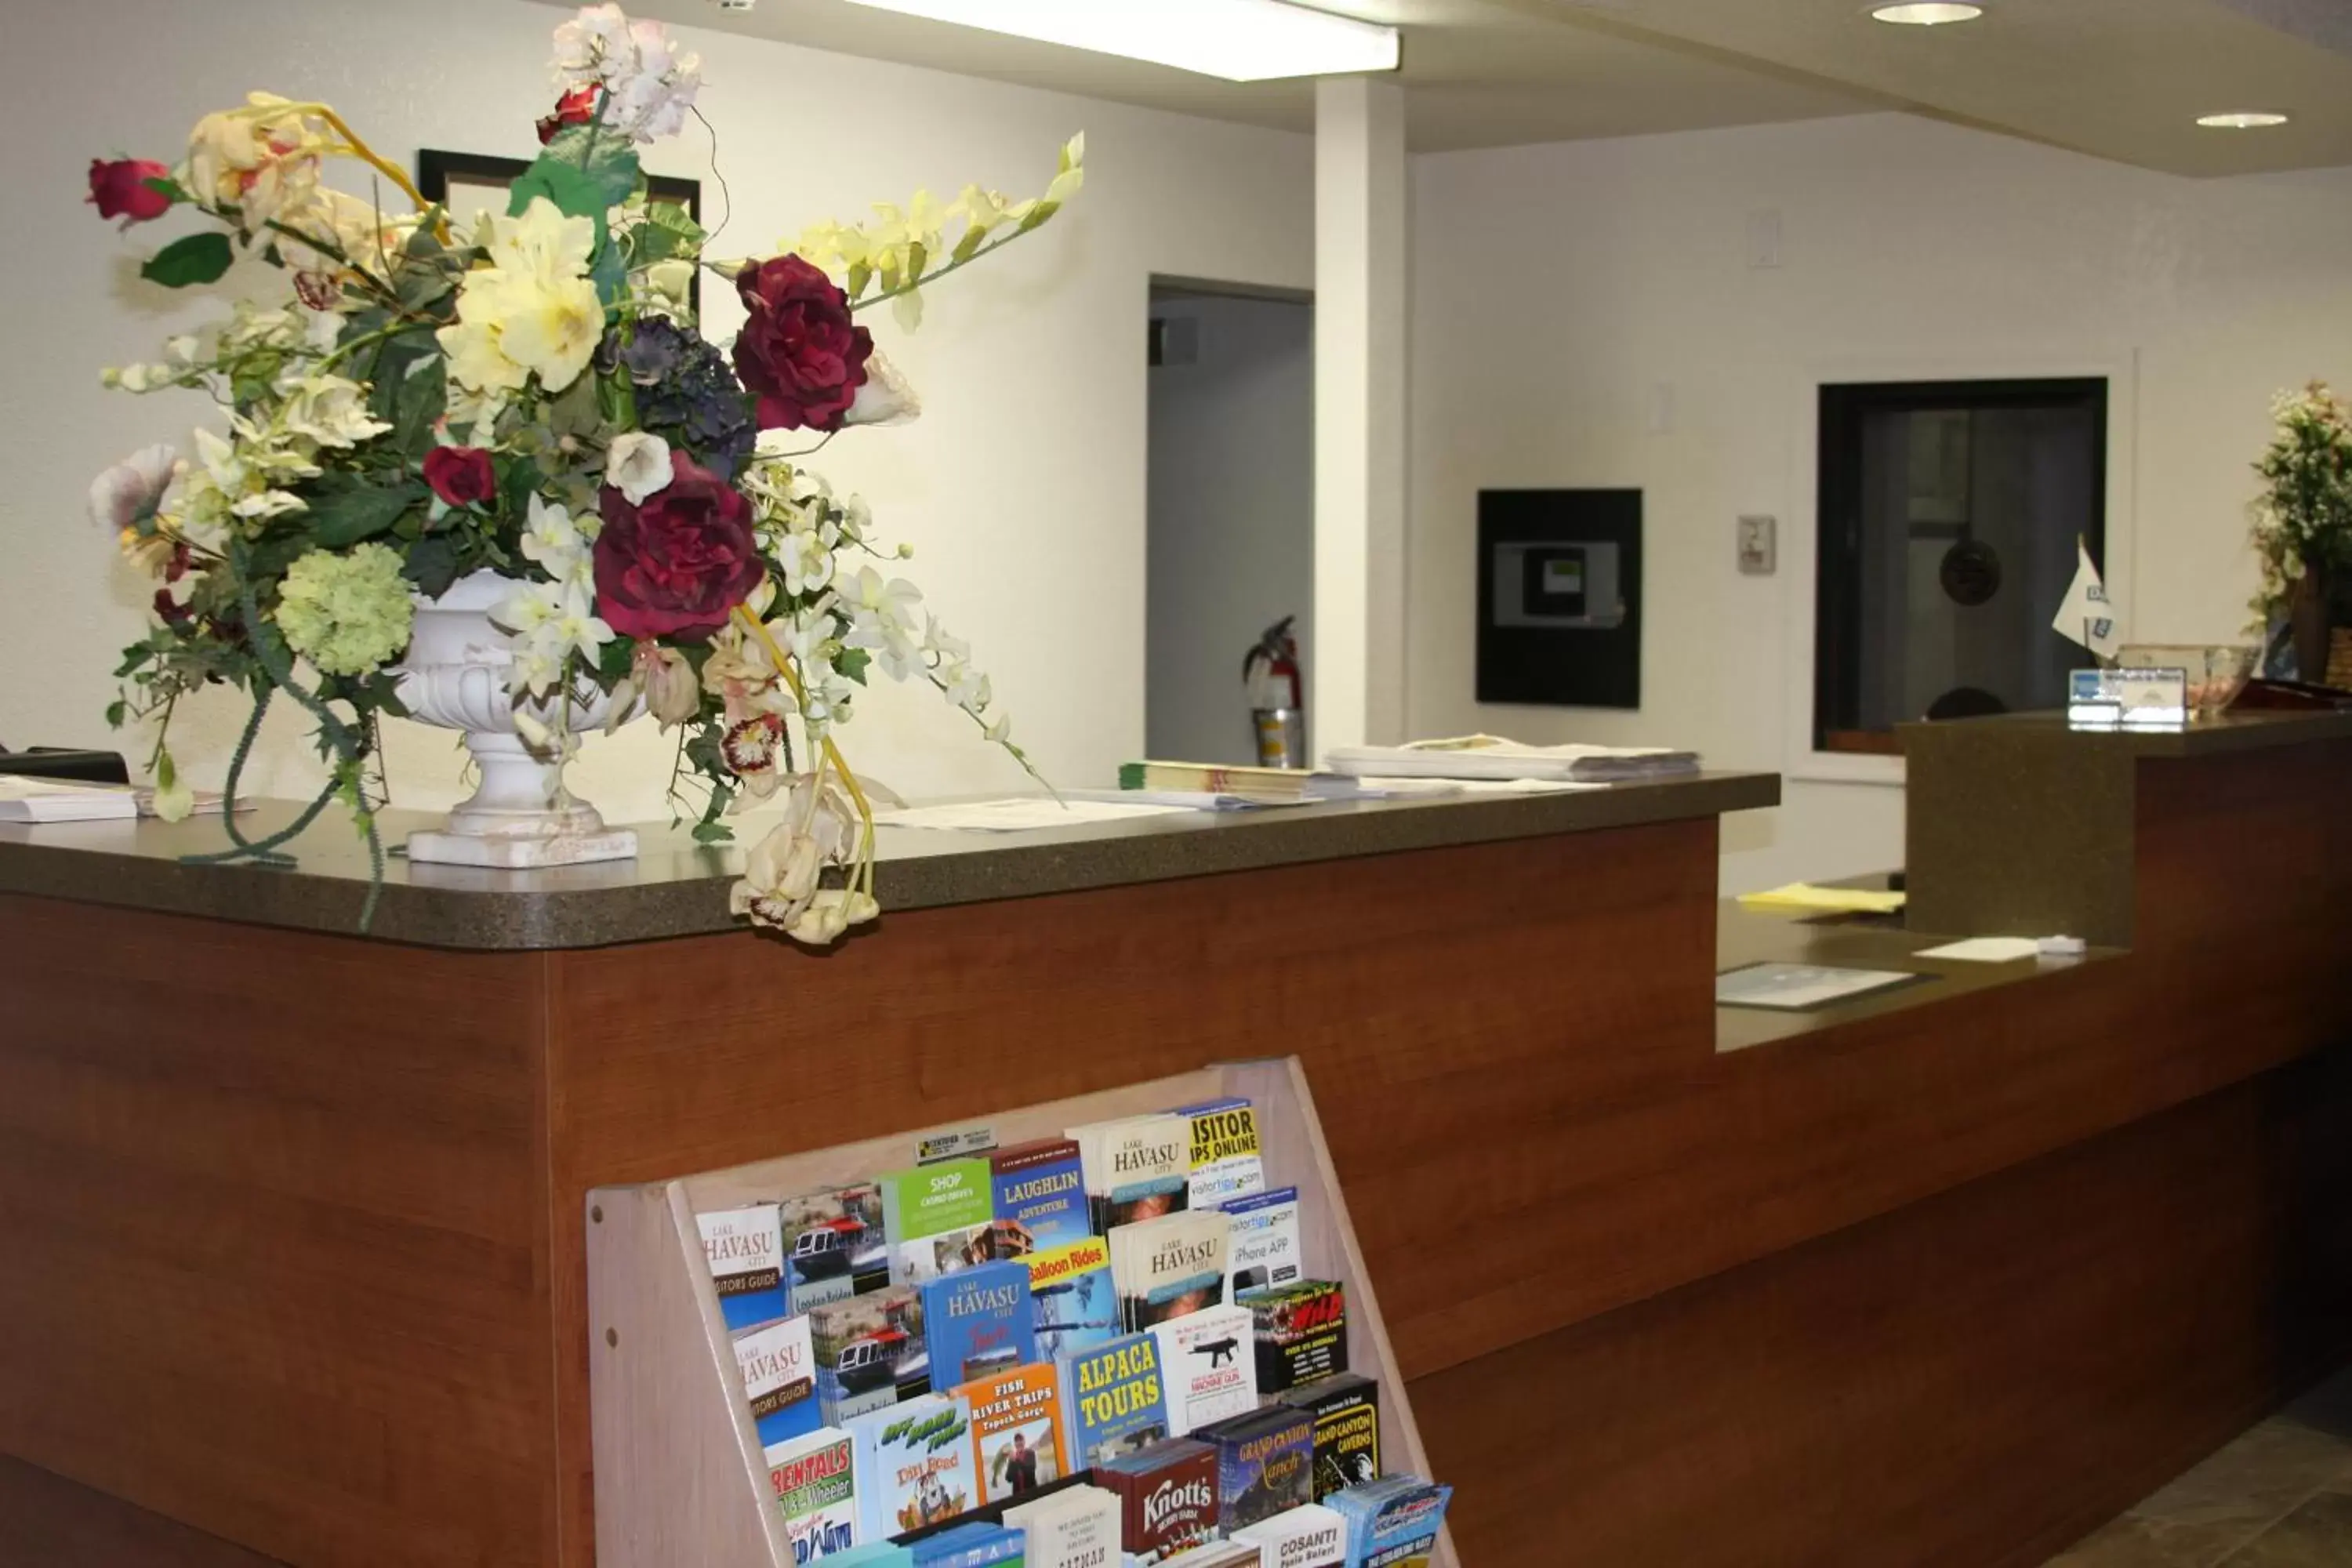 Lobby or reception, Lobby/Reception in Days Inn & Suites by Wyndham Needles